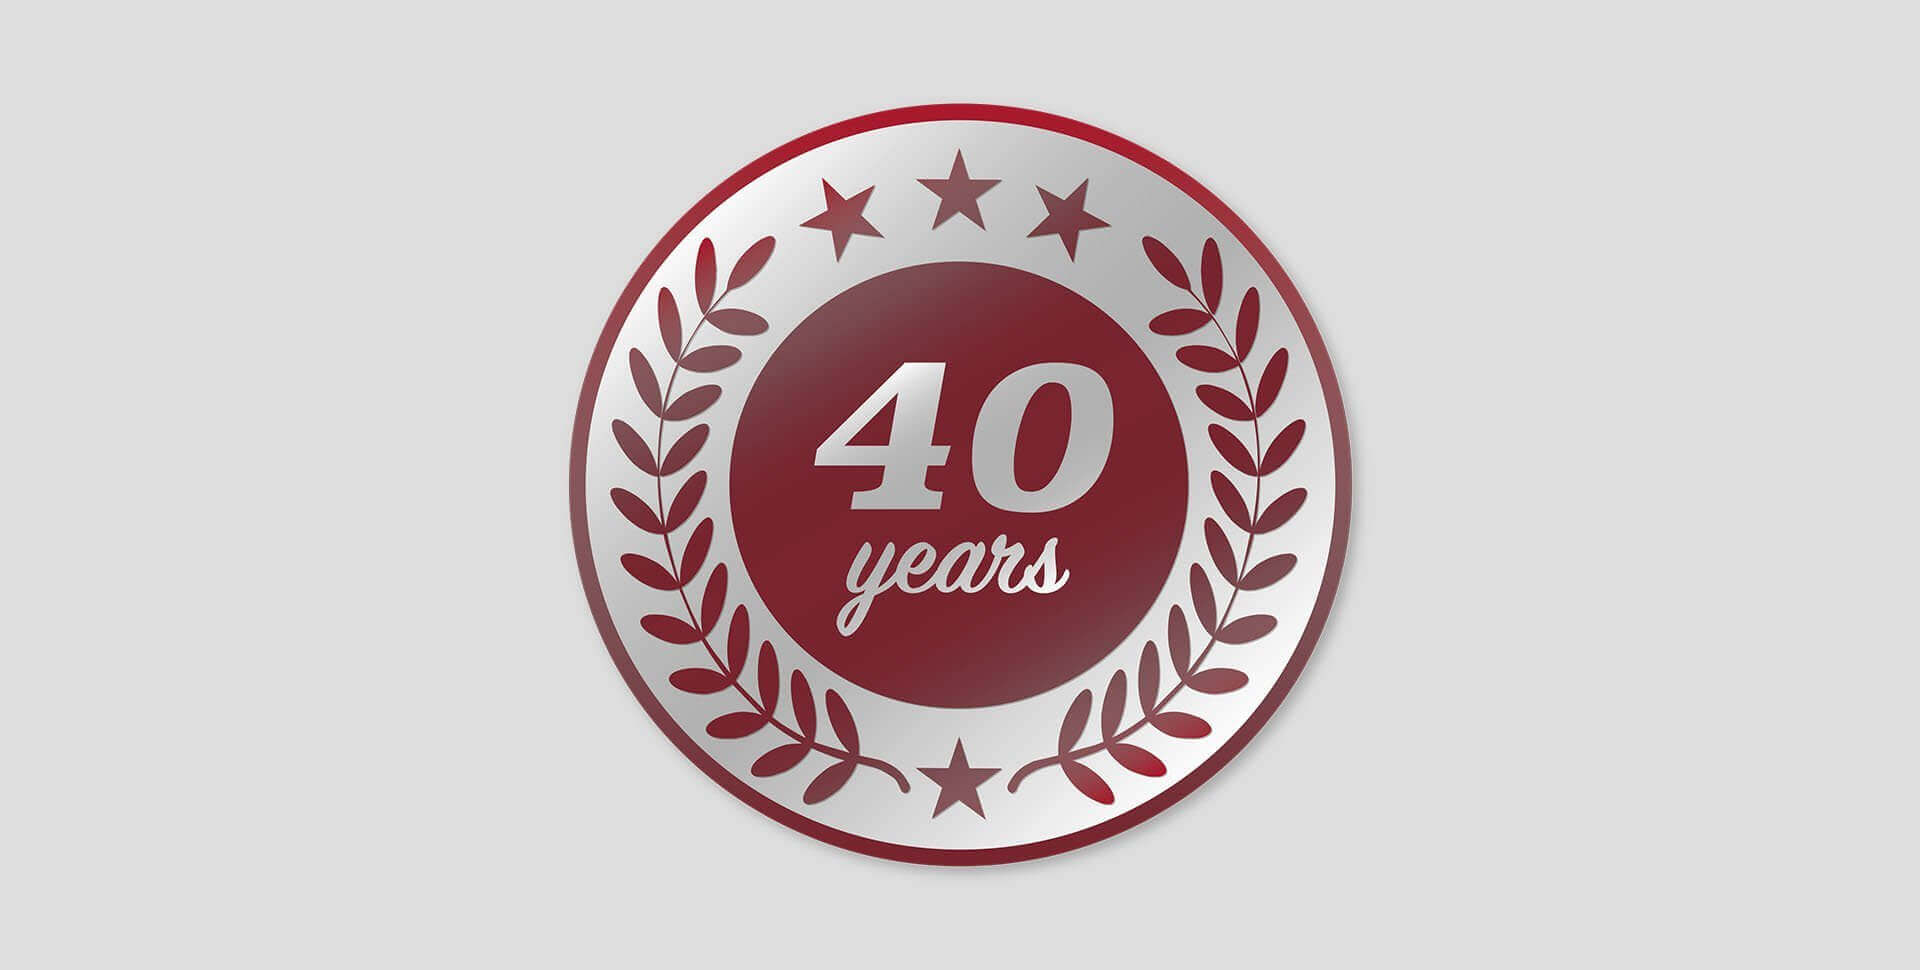 2012 – 40 Years